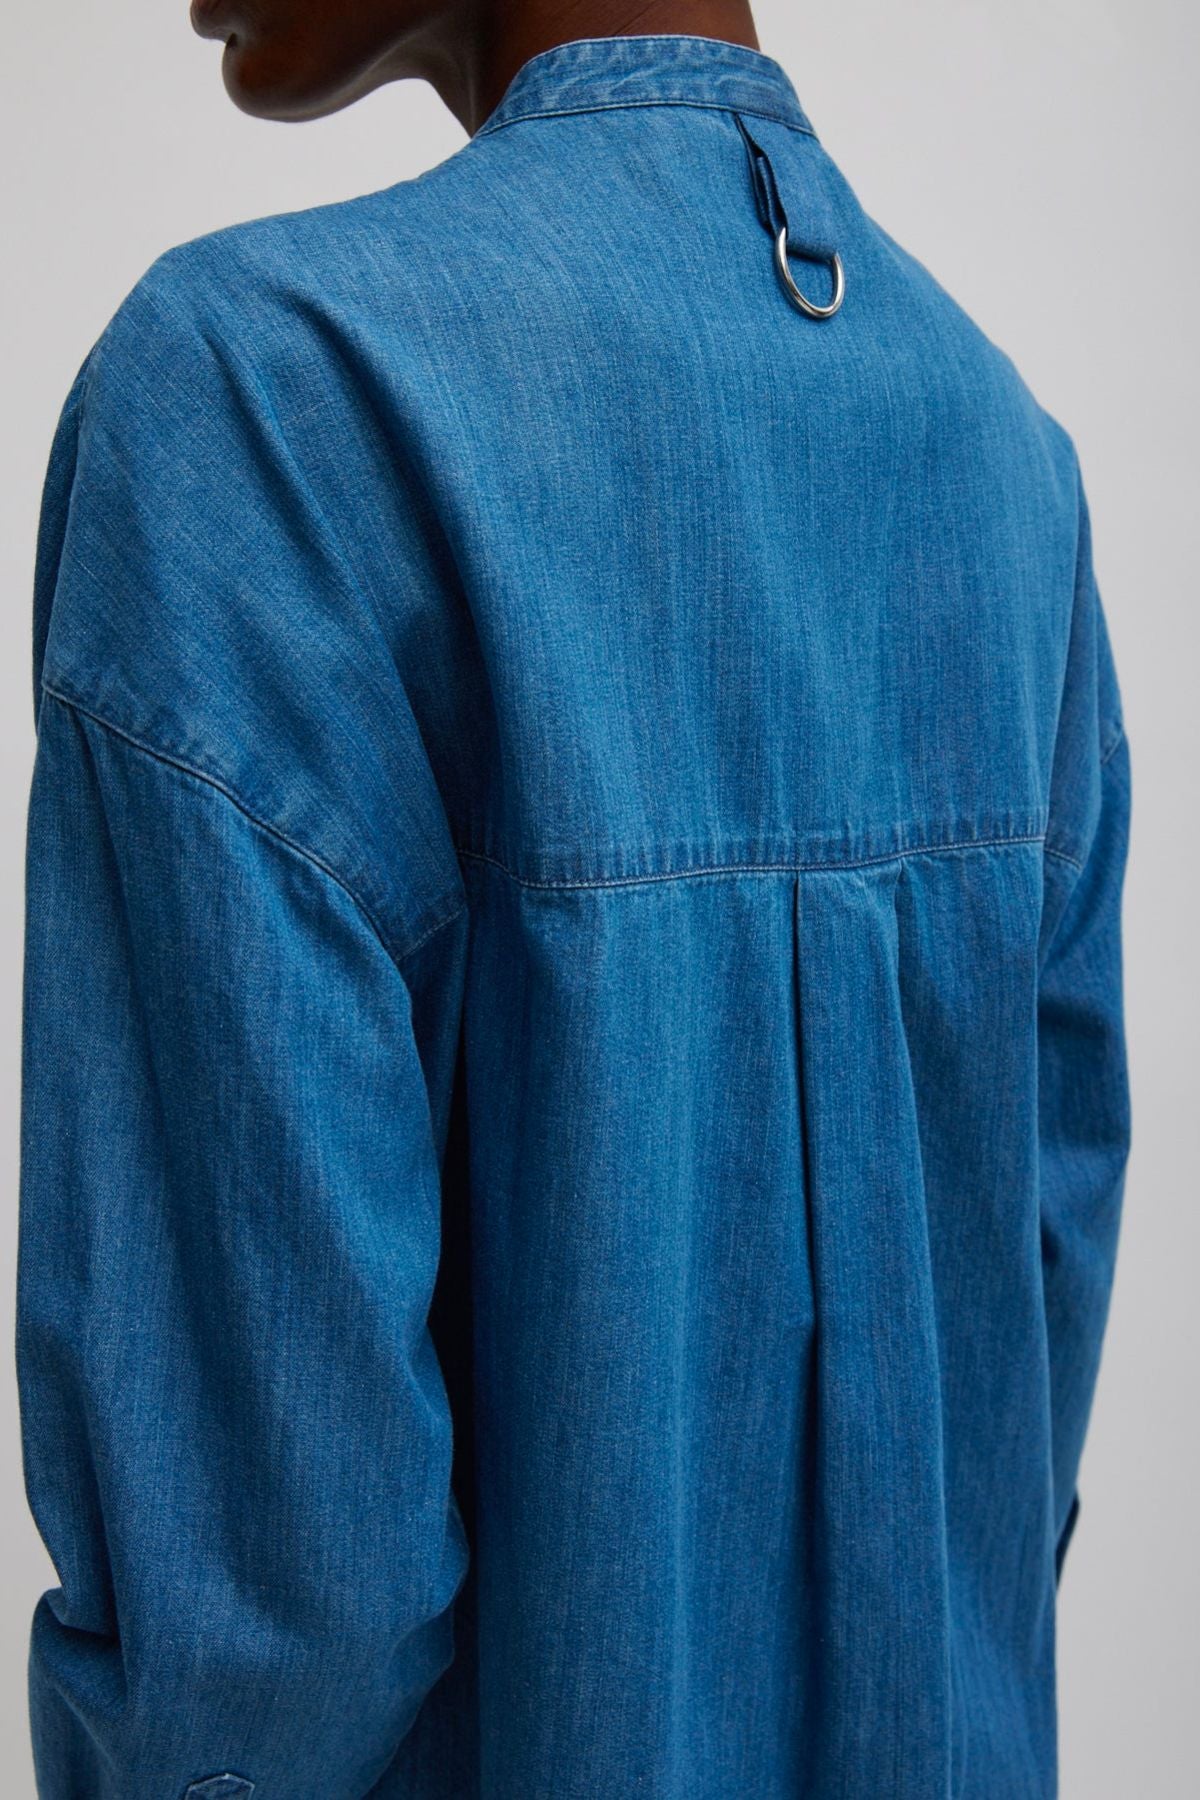 Tibi Lightweight Stone Wash Denim Tuxedo Shirt - Denim Blue